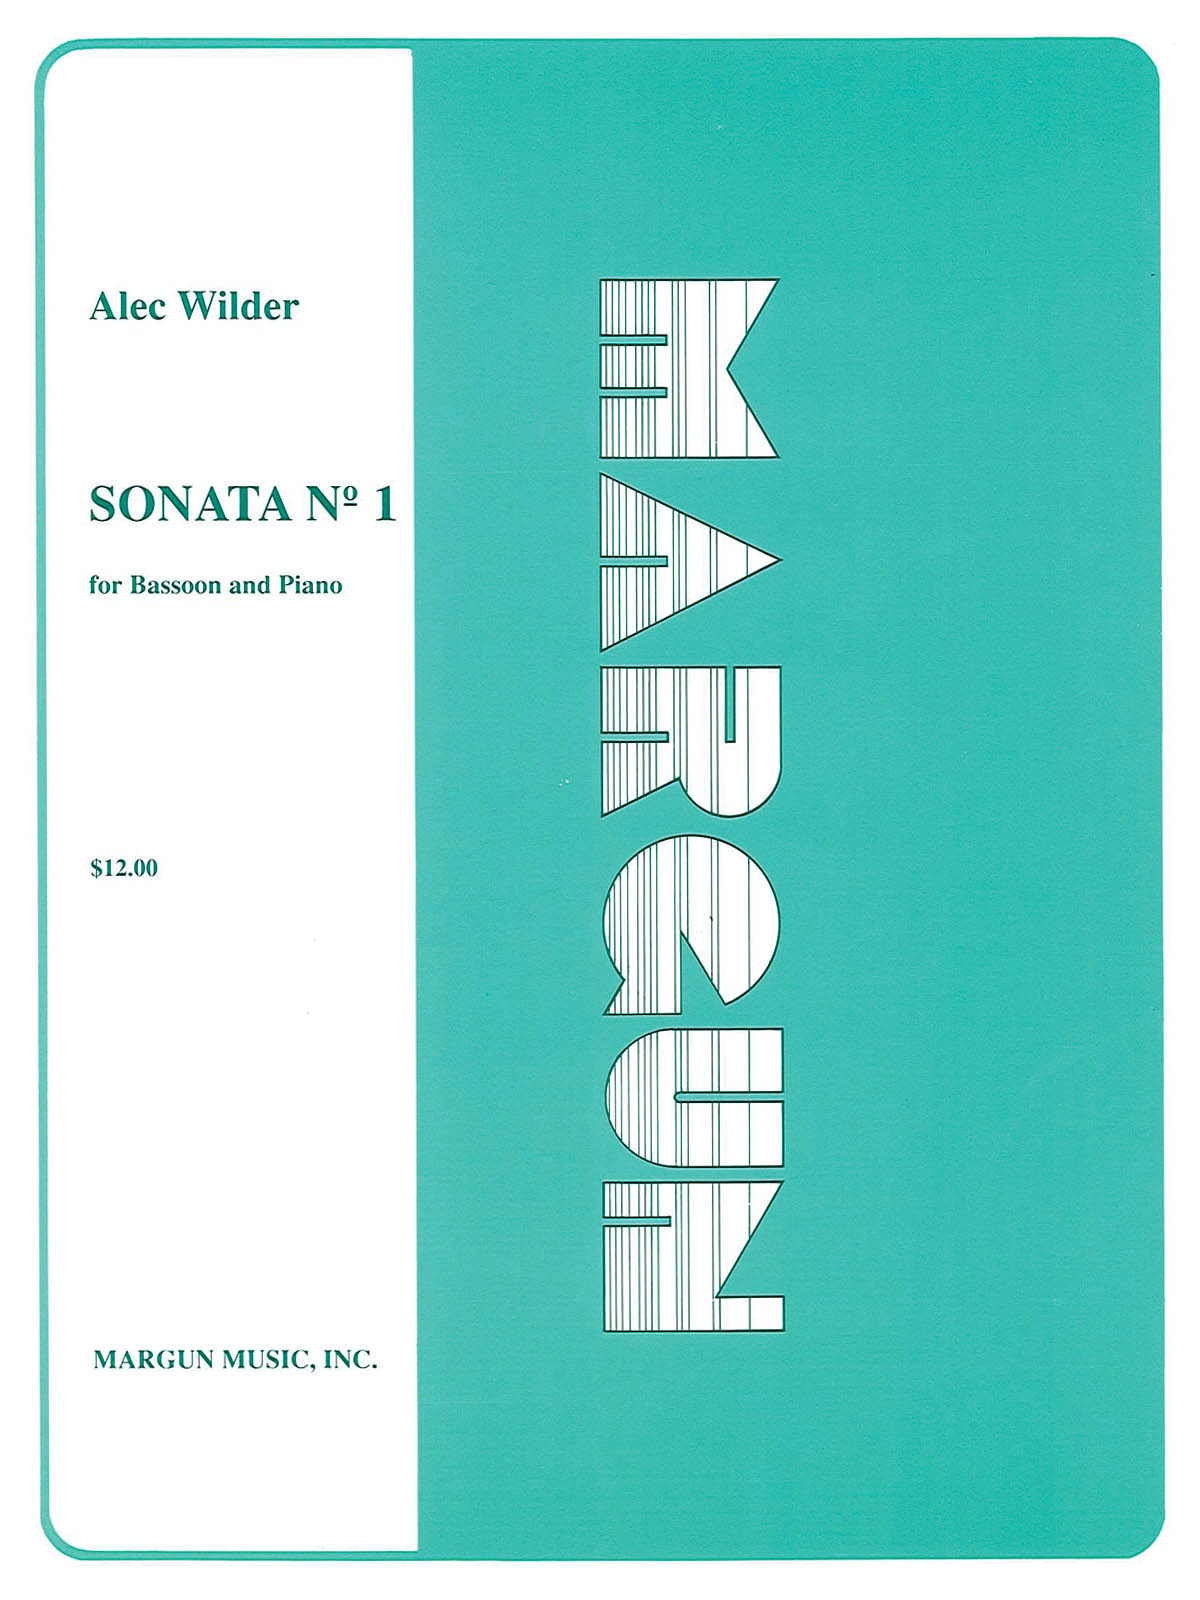 Sonata No 1 for Bassoon and Piano